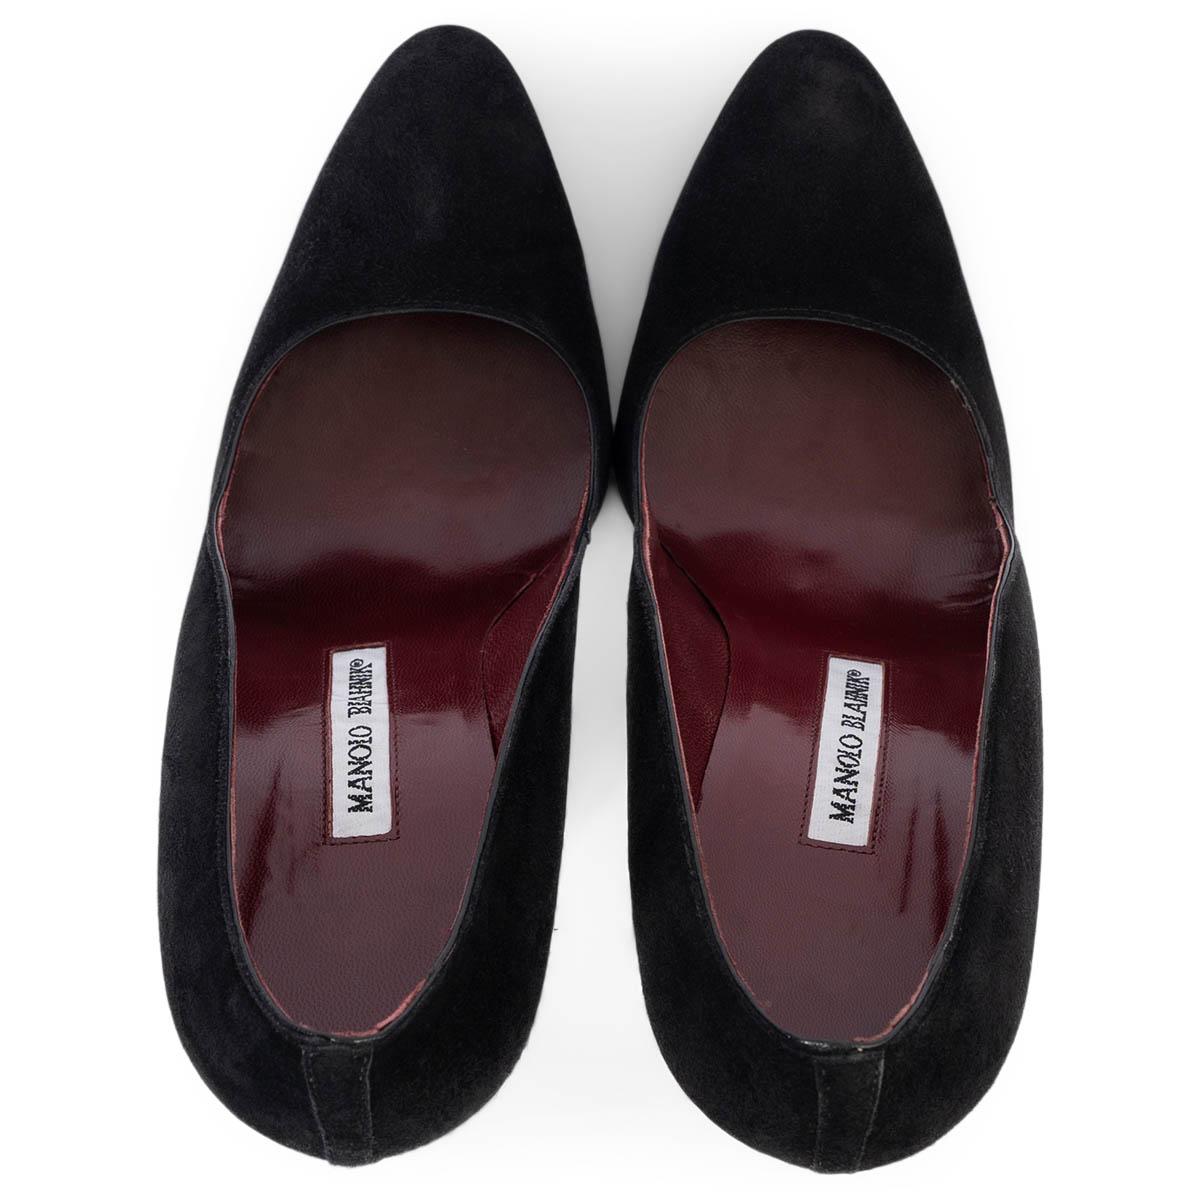 MANOLO BLAHNIK black suede CURVED HEEL Pumps Shoes 38 For Sale 1